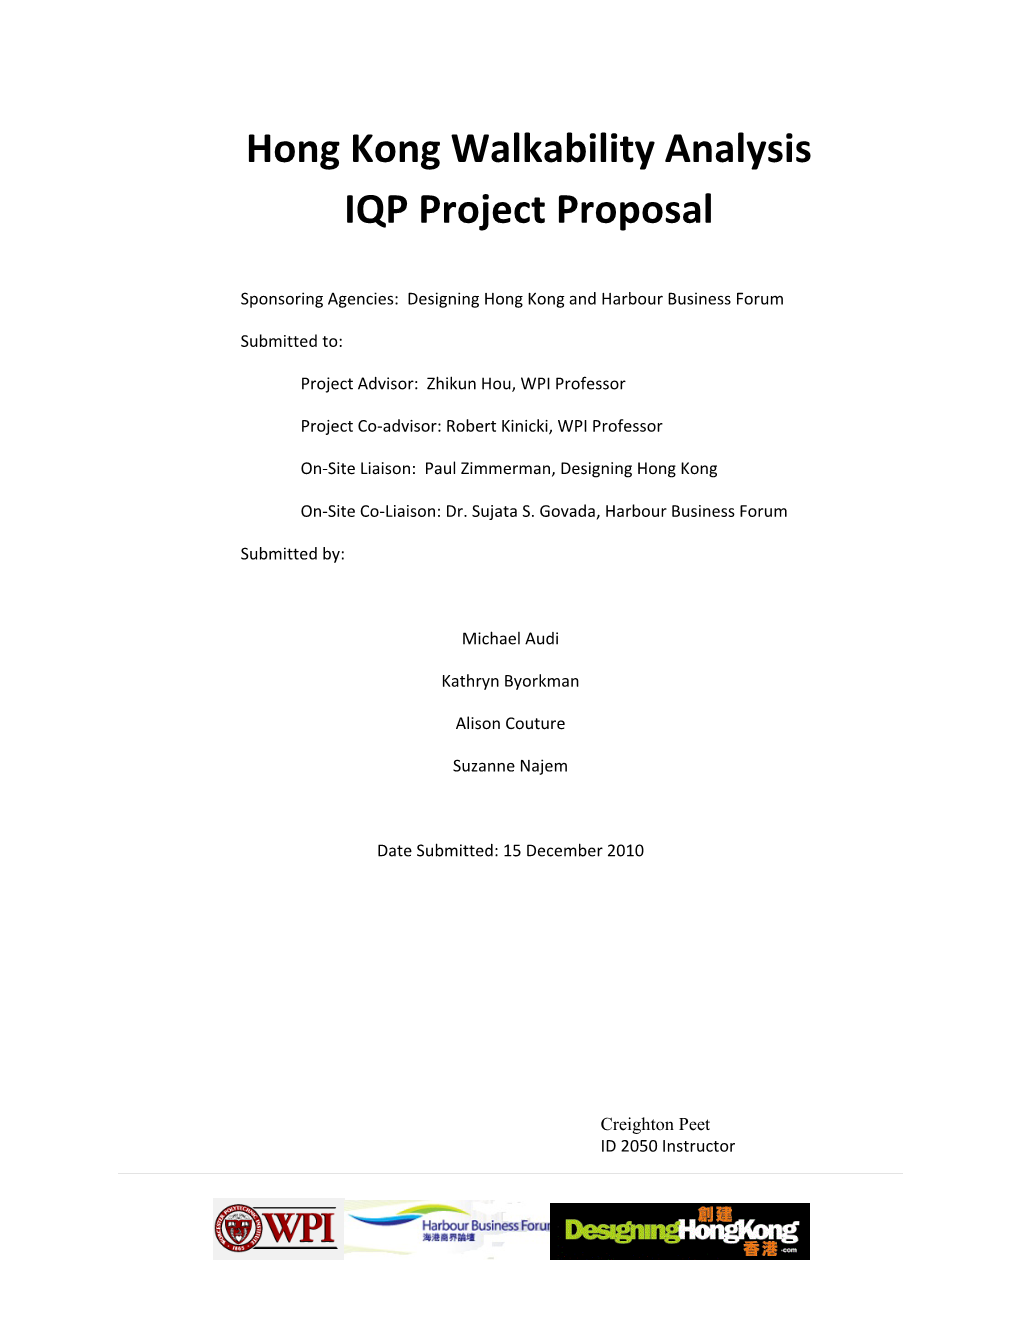 Hong Kong Walkability Analysis IQP Project Proposal